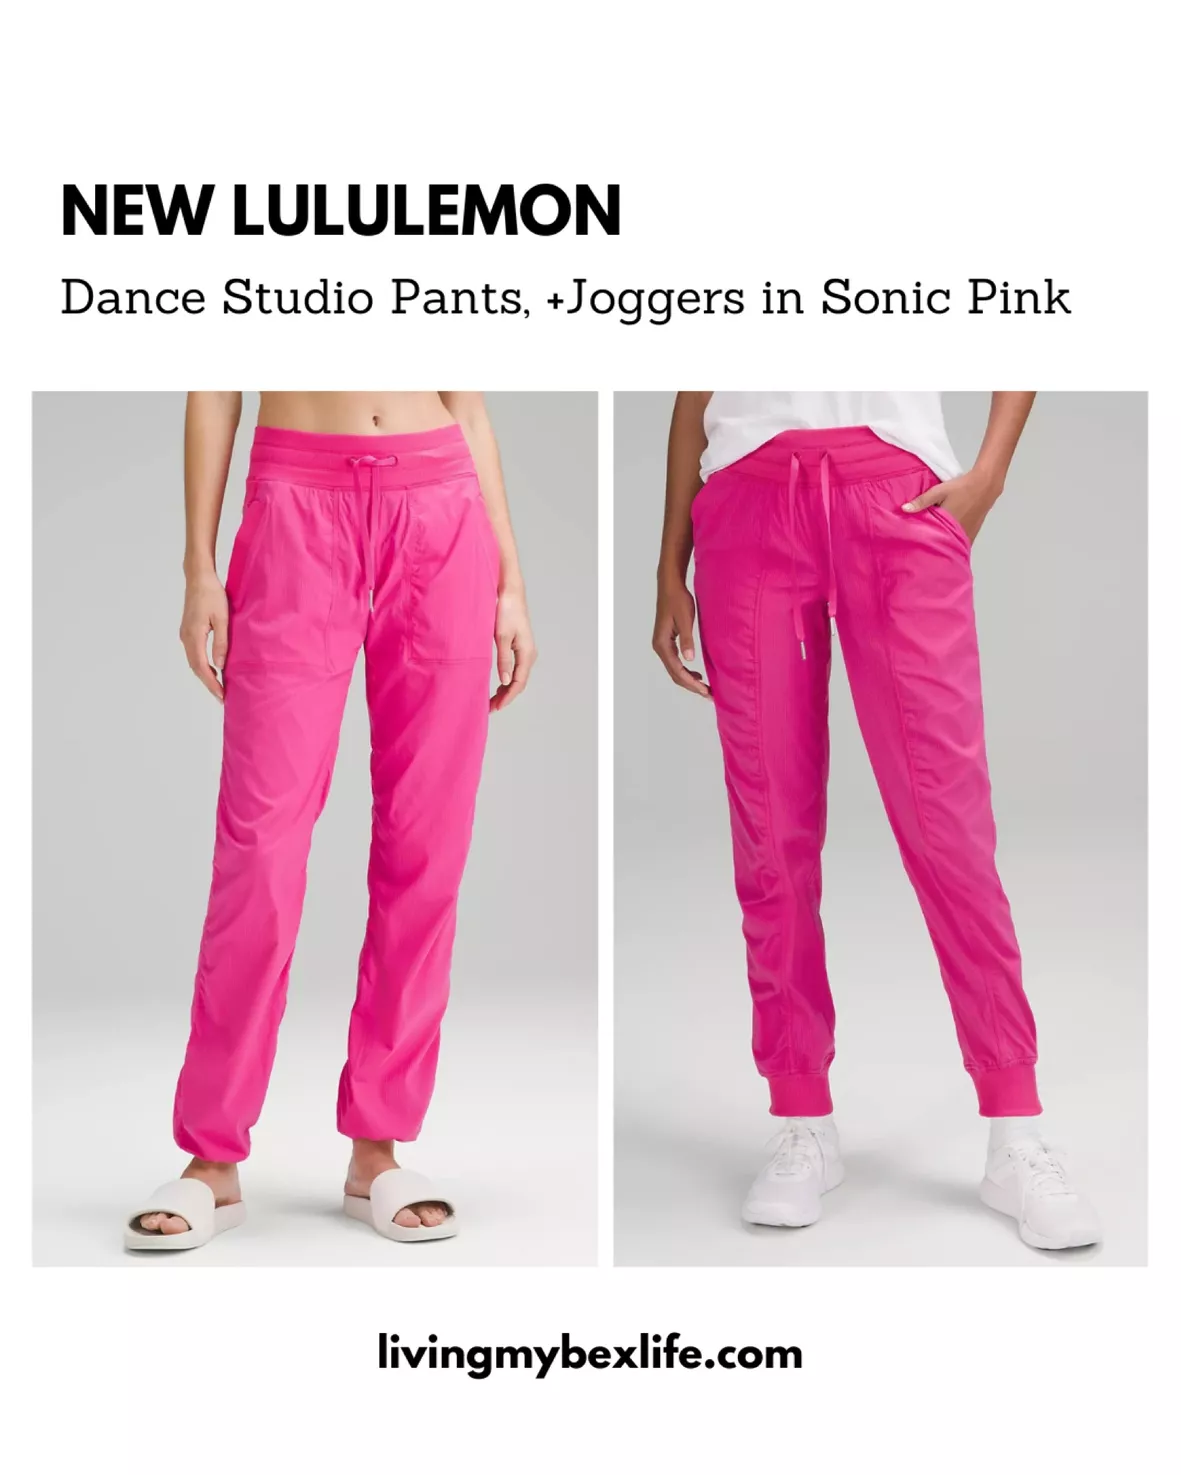 lululemon dance studio pants - Google Search